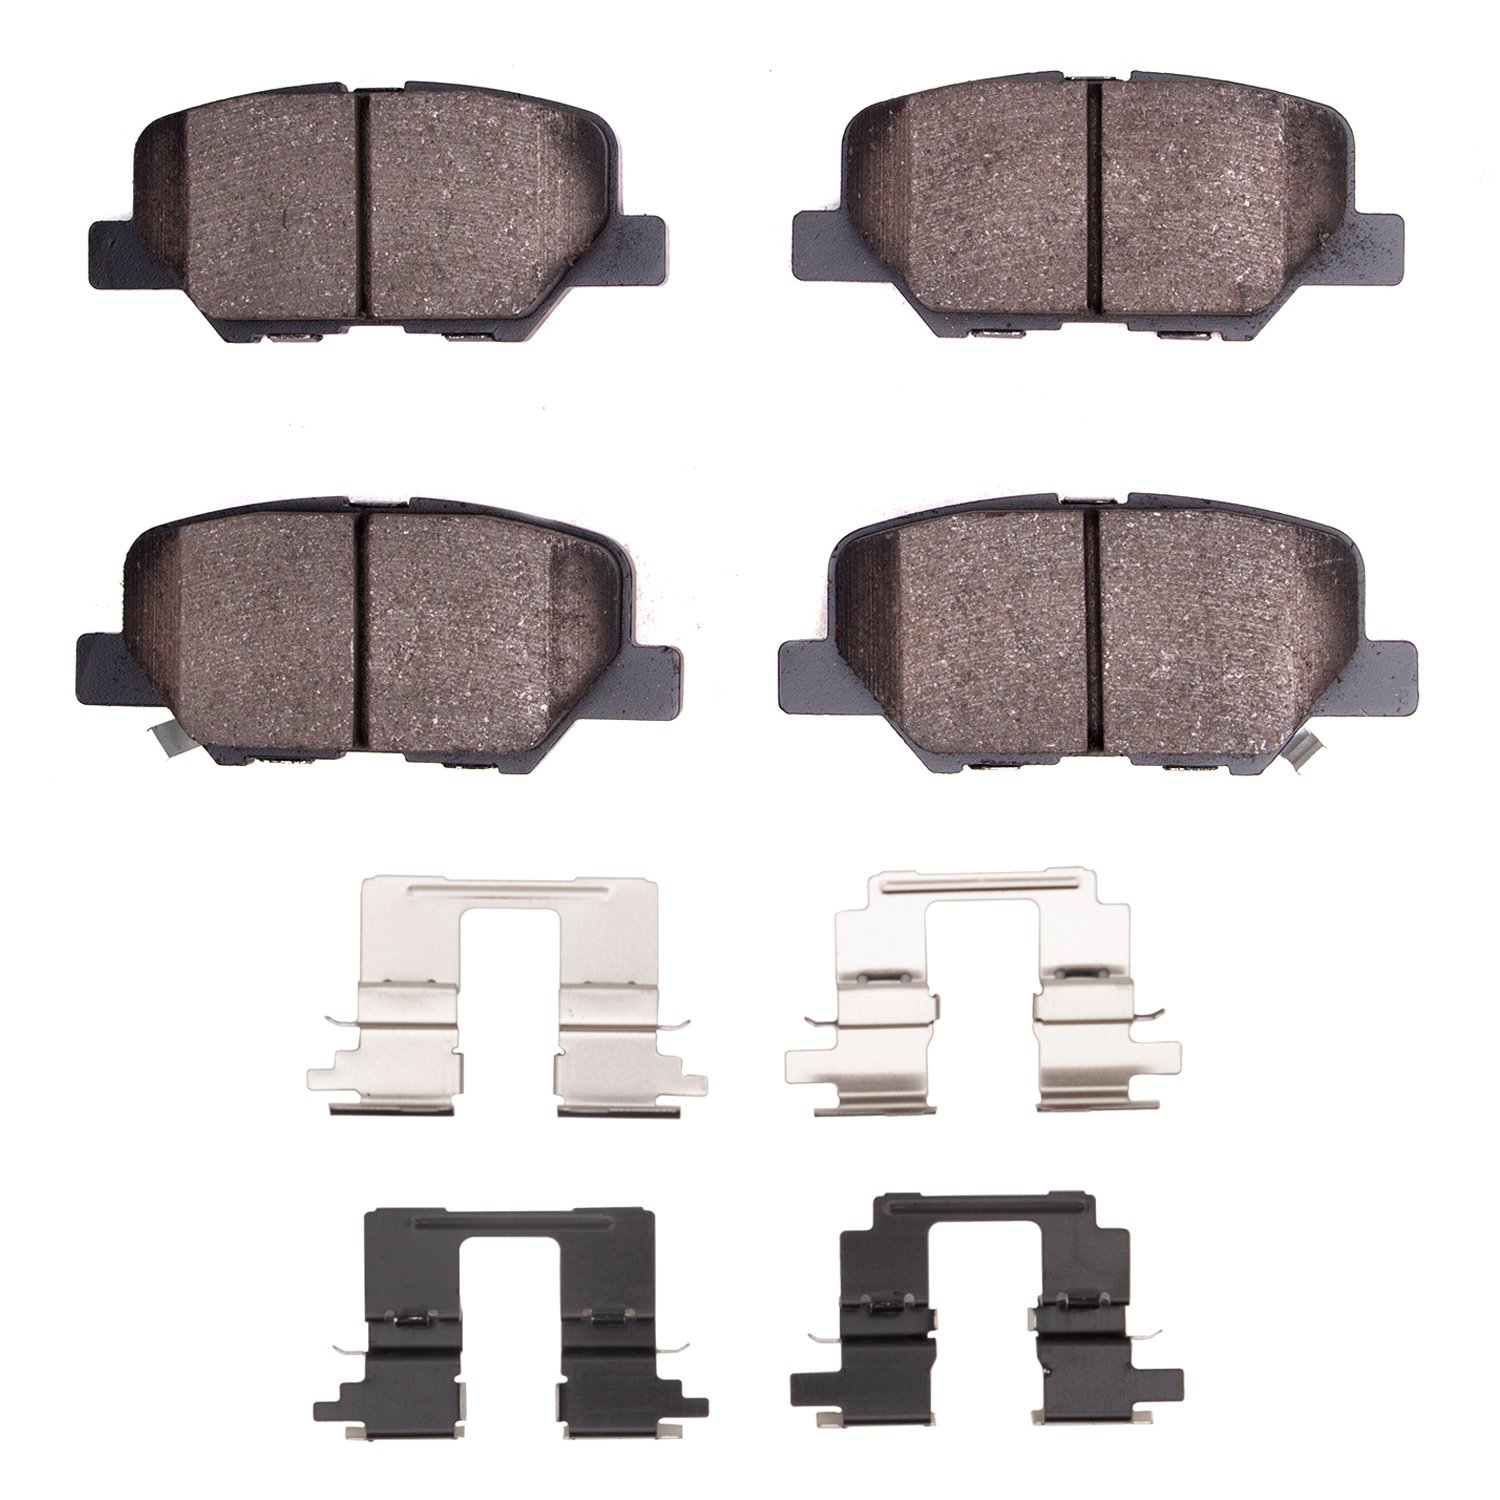 1310-1679-02 3000-Series Ceramic Brake Pads & Hardware Kit, 2014-2018 Ford/Lincoln/Mercury/Mazda, Position: Rear